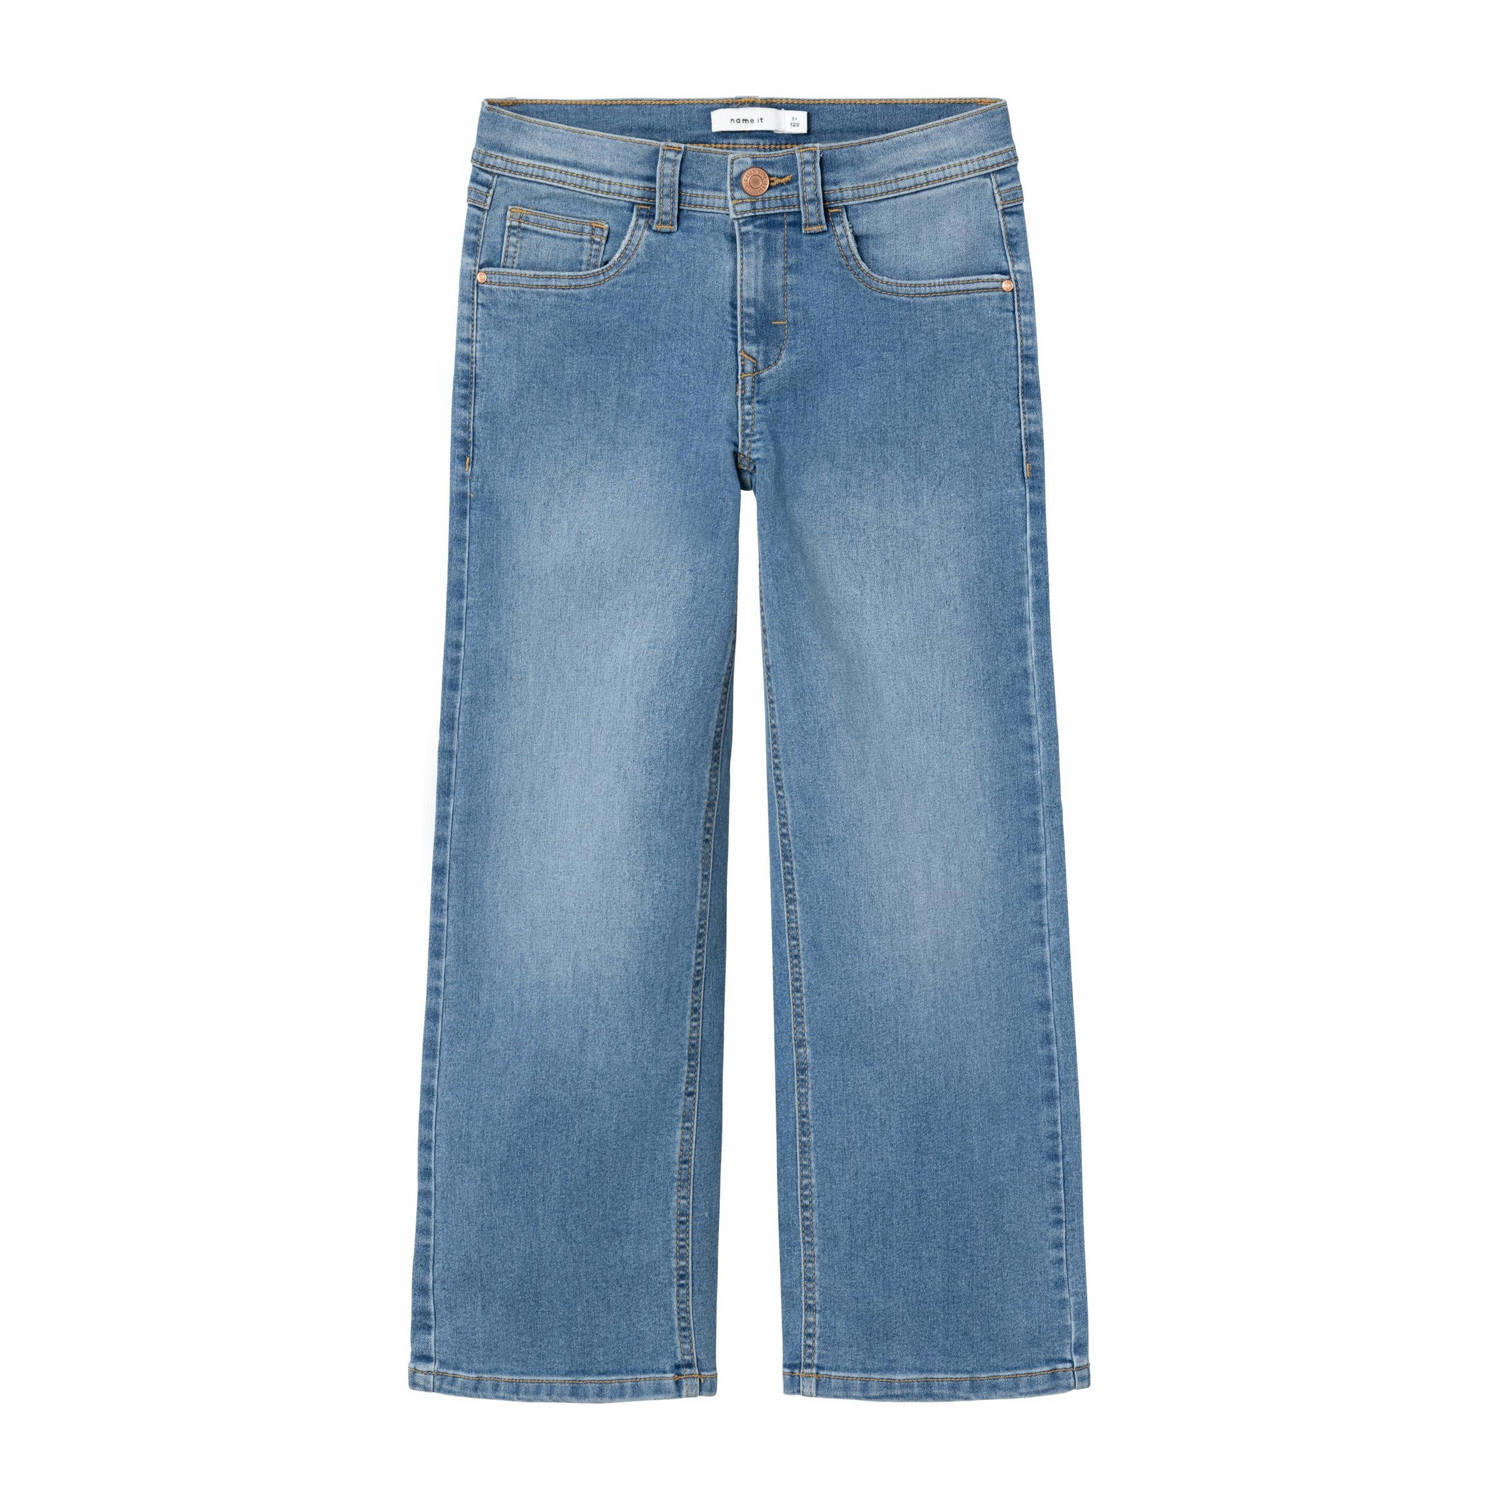 Name it KIDS wide leg jeans NKFROSE medium blue denim Blauw Meisjes Stretchdenim 116